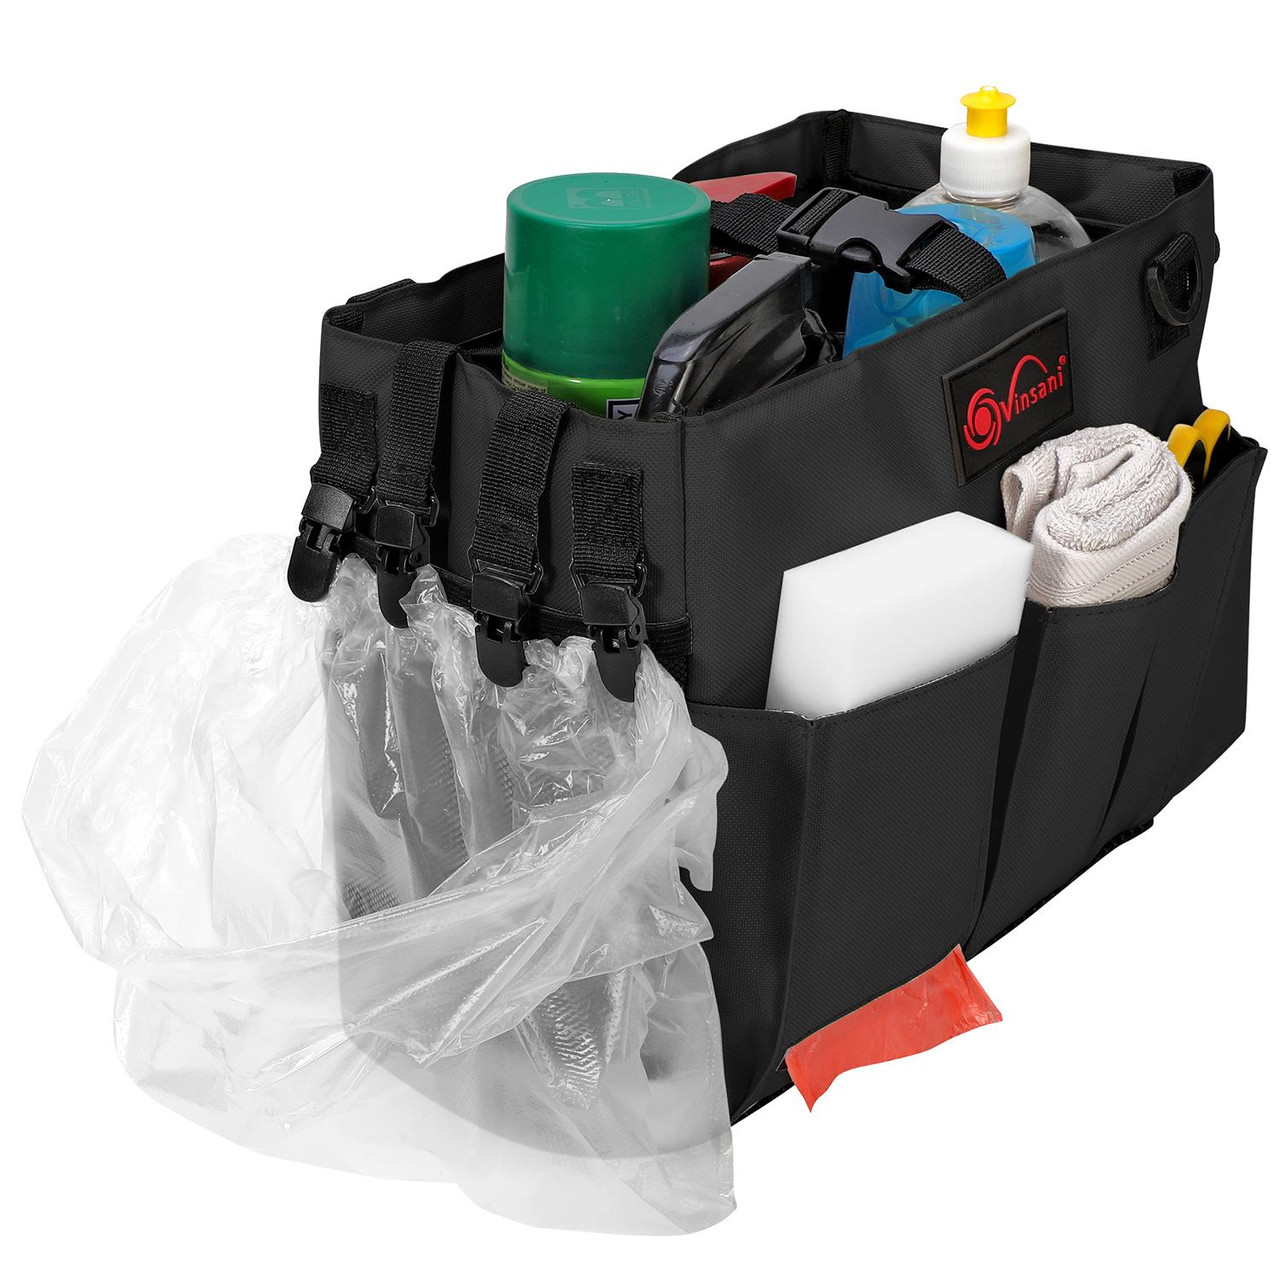 Cleaning Caddy Multifunctional Storage Organiser Bag Large Black